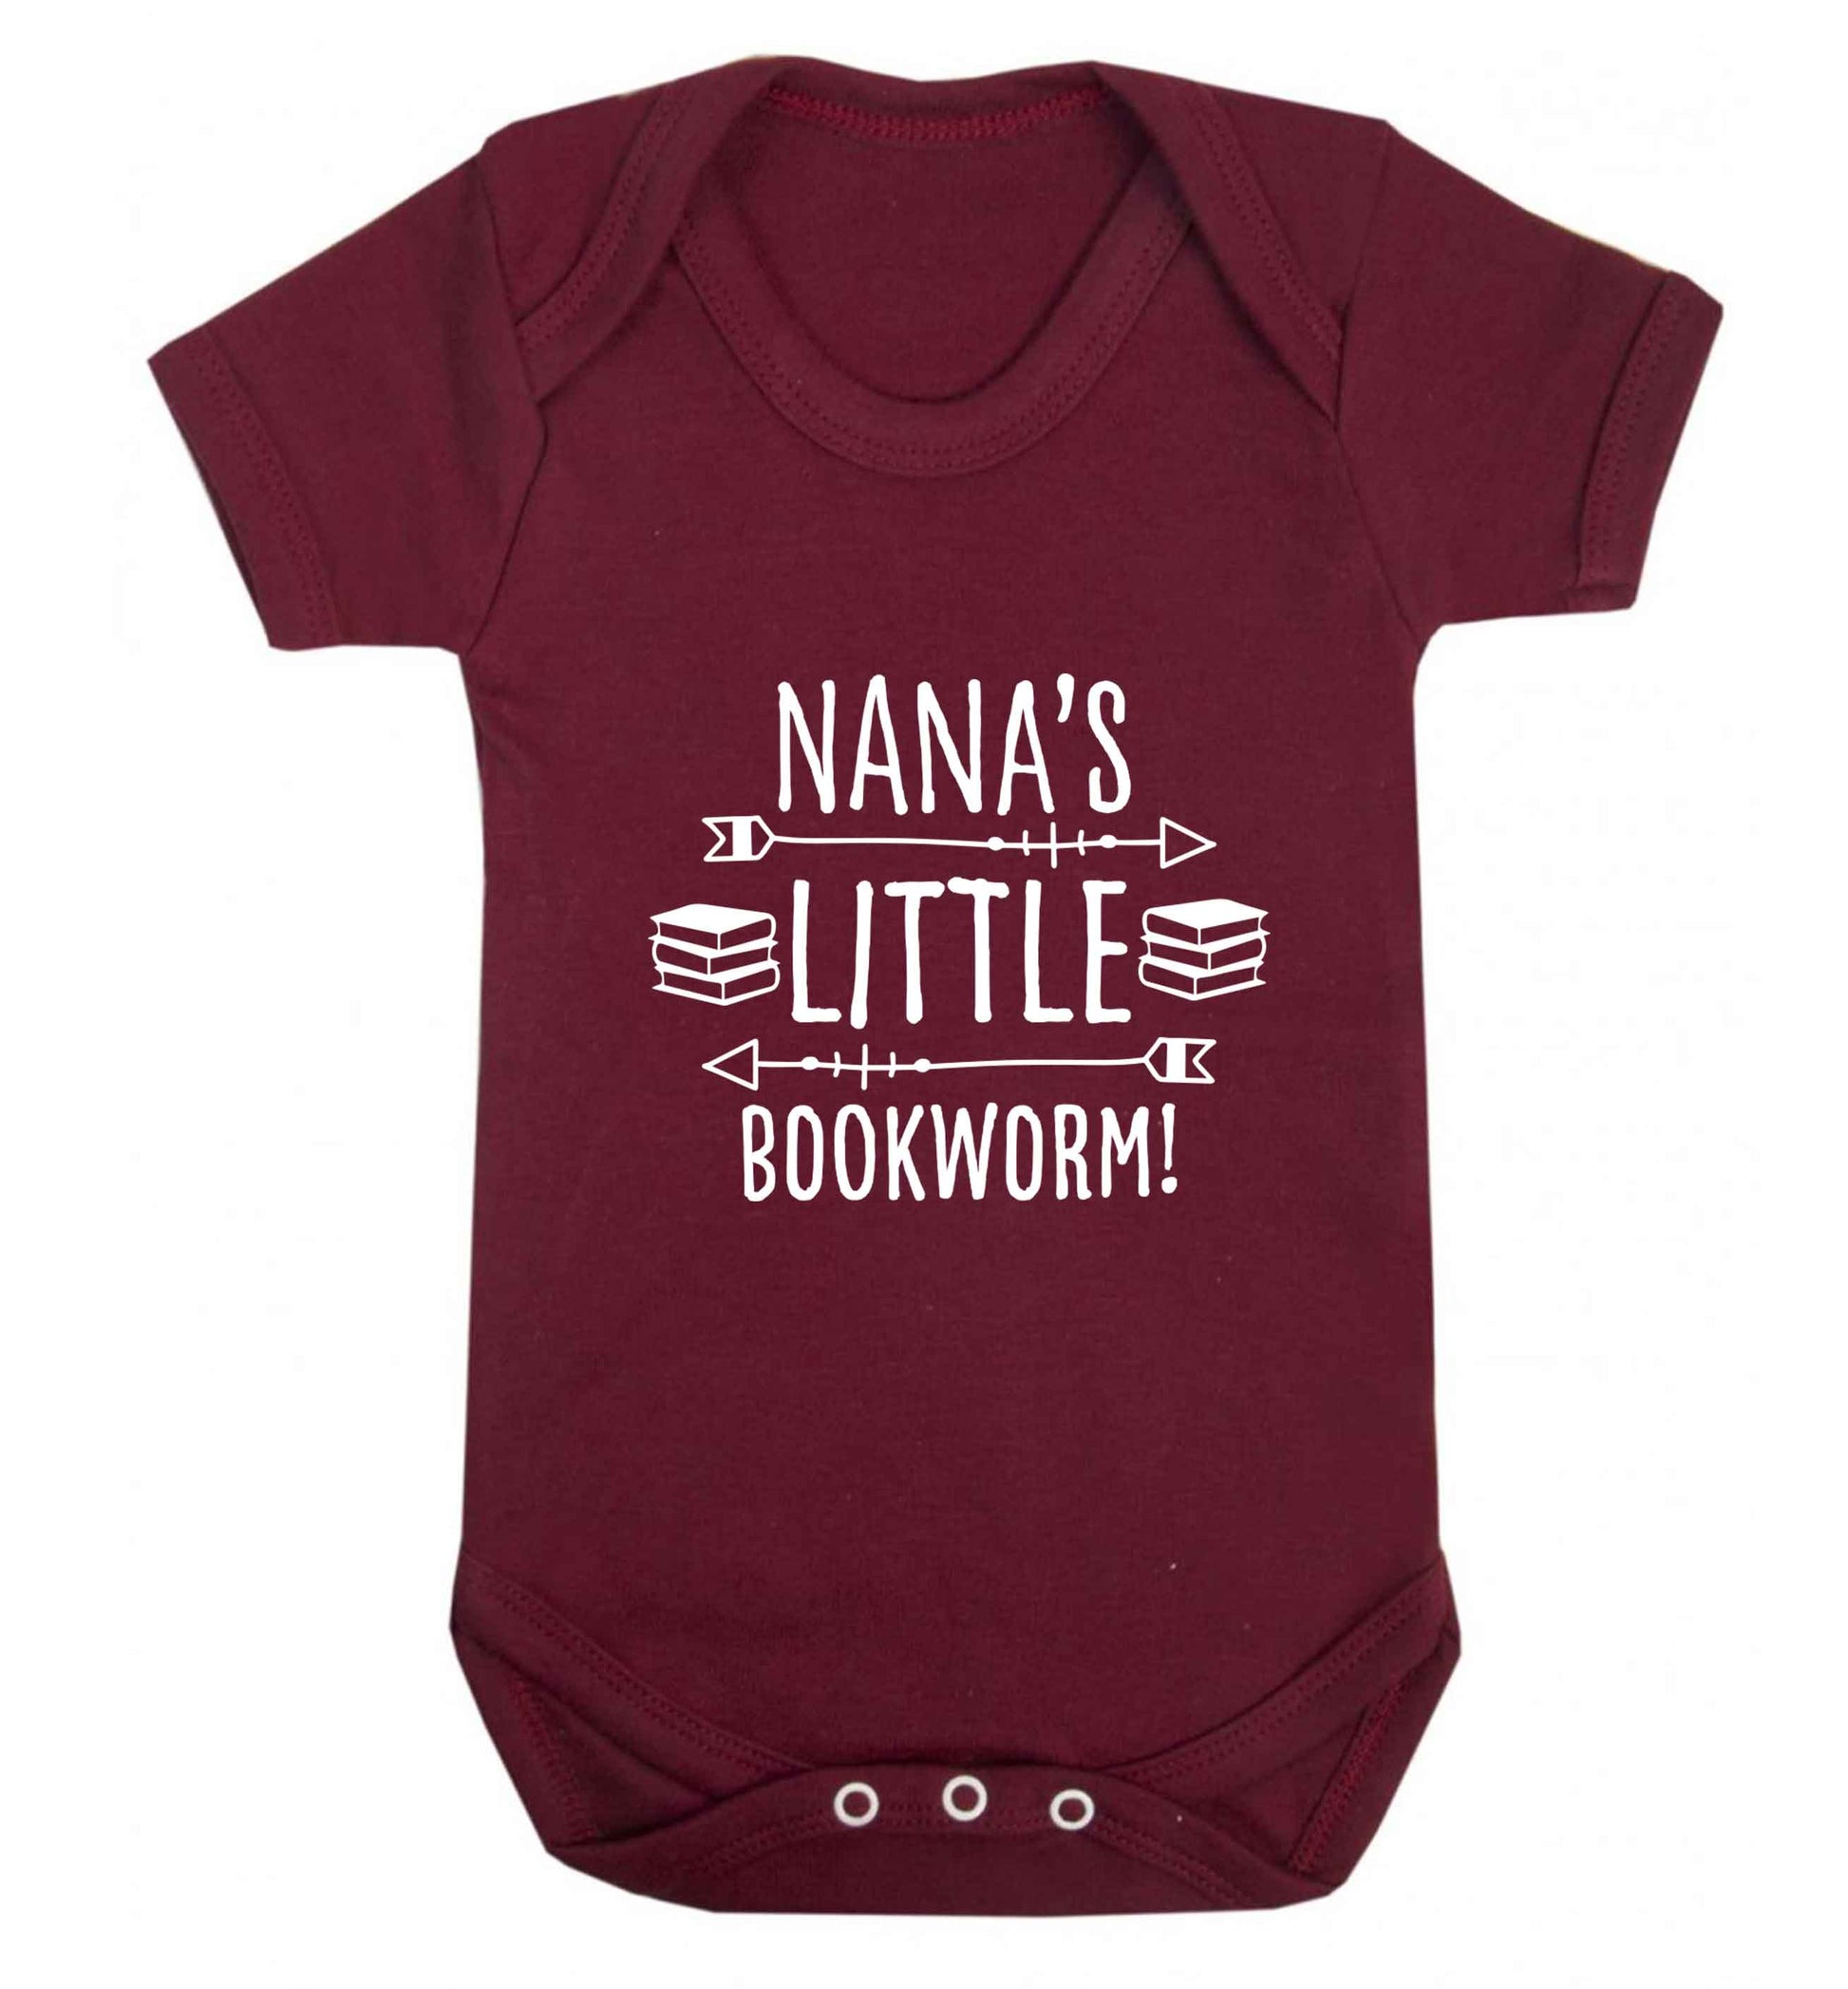 Nana's little bookworm baby vest maroon 18-24 months